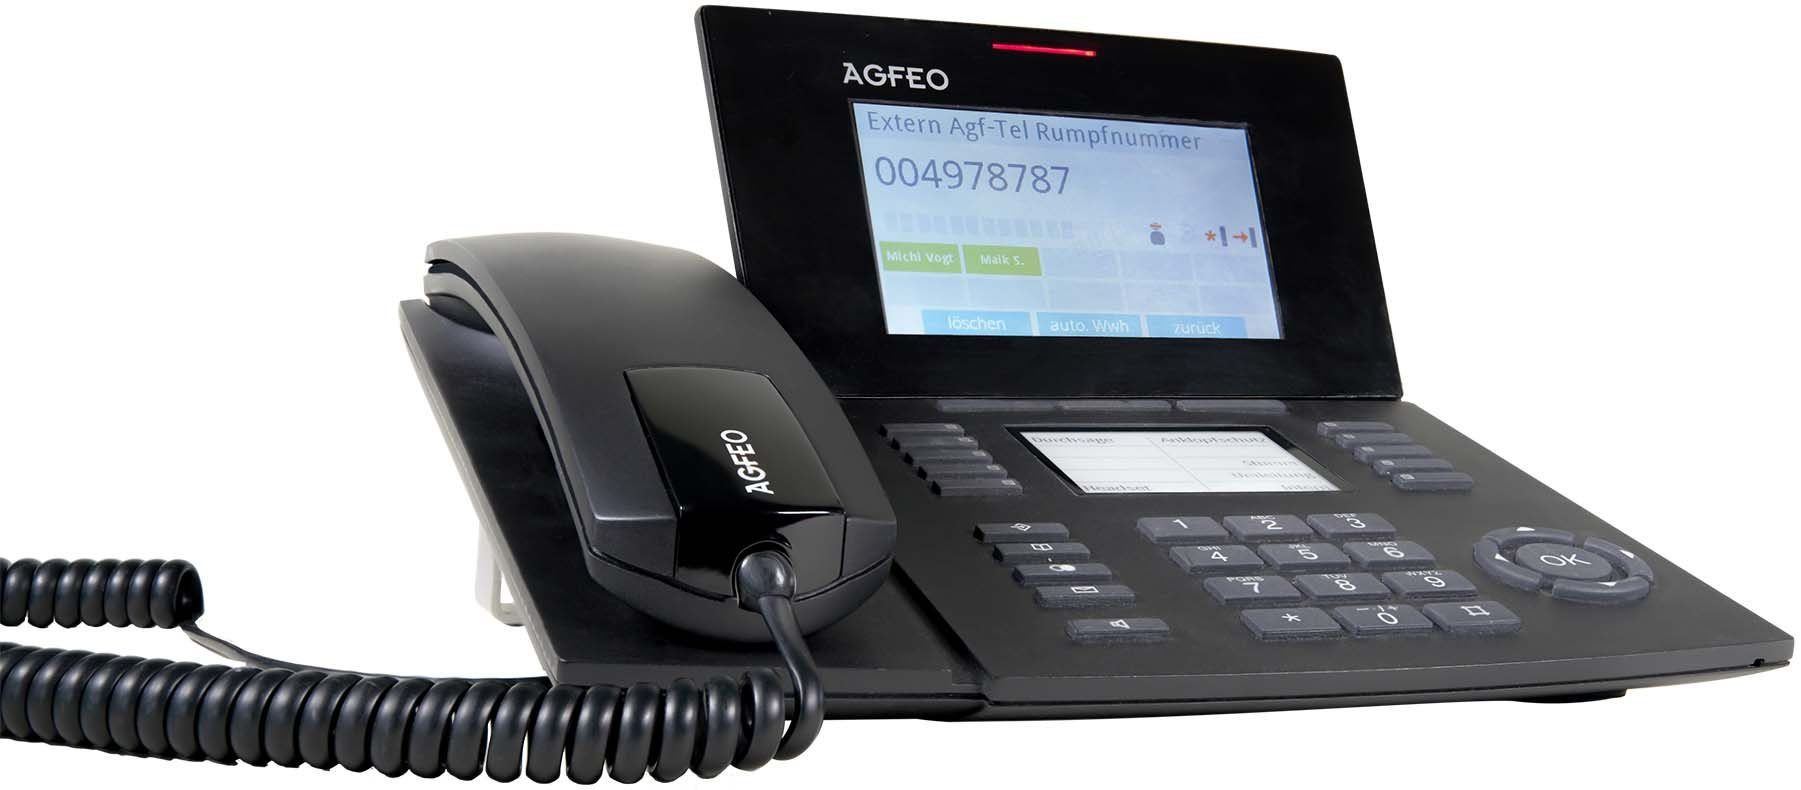 Agfeo AGFEO ST56 schwarz SENSORfon Festnetztelefon Systemtelefon